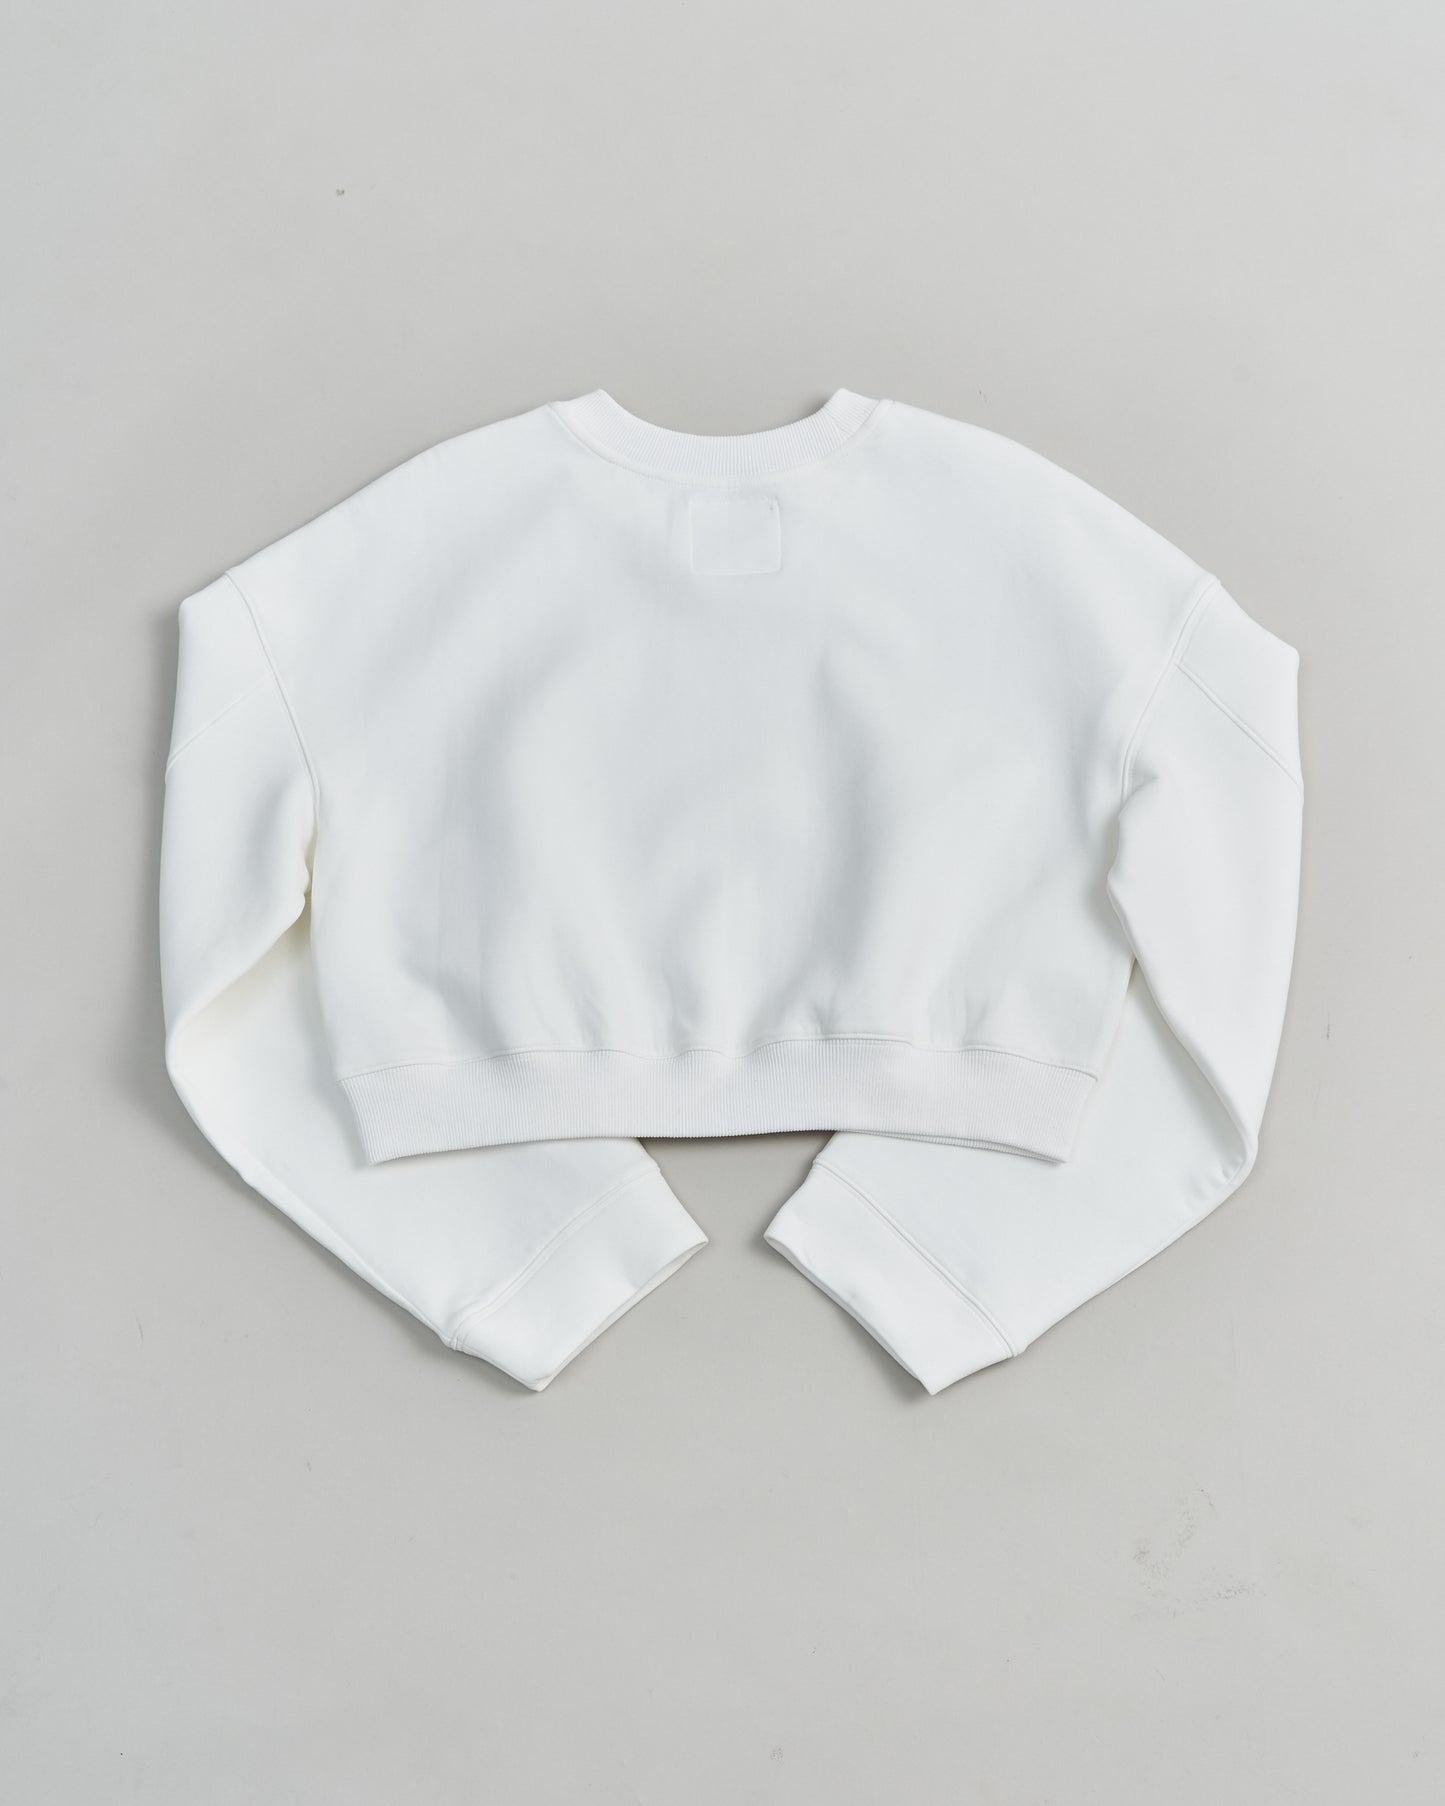 A02 短版衛衣 Cropped Sweatshirt